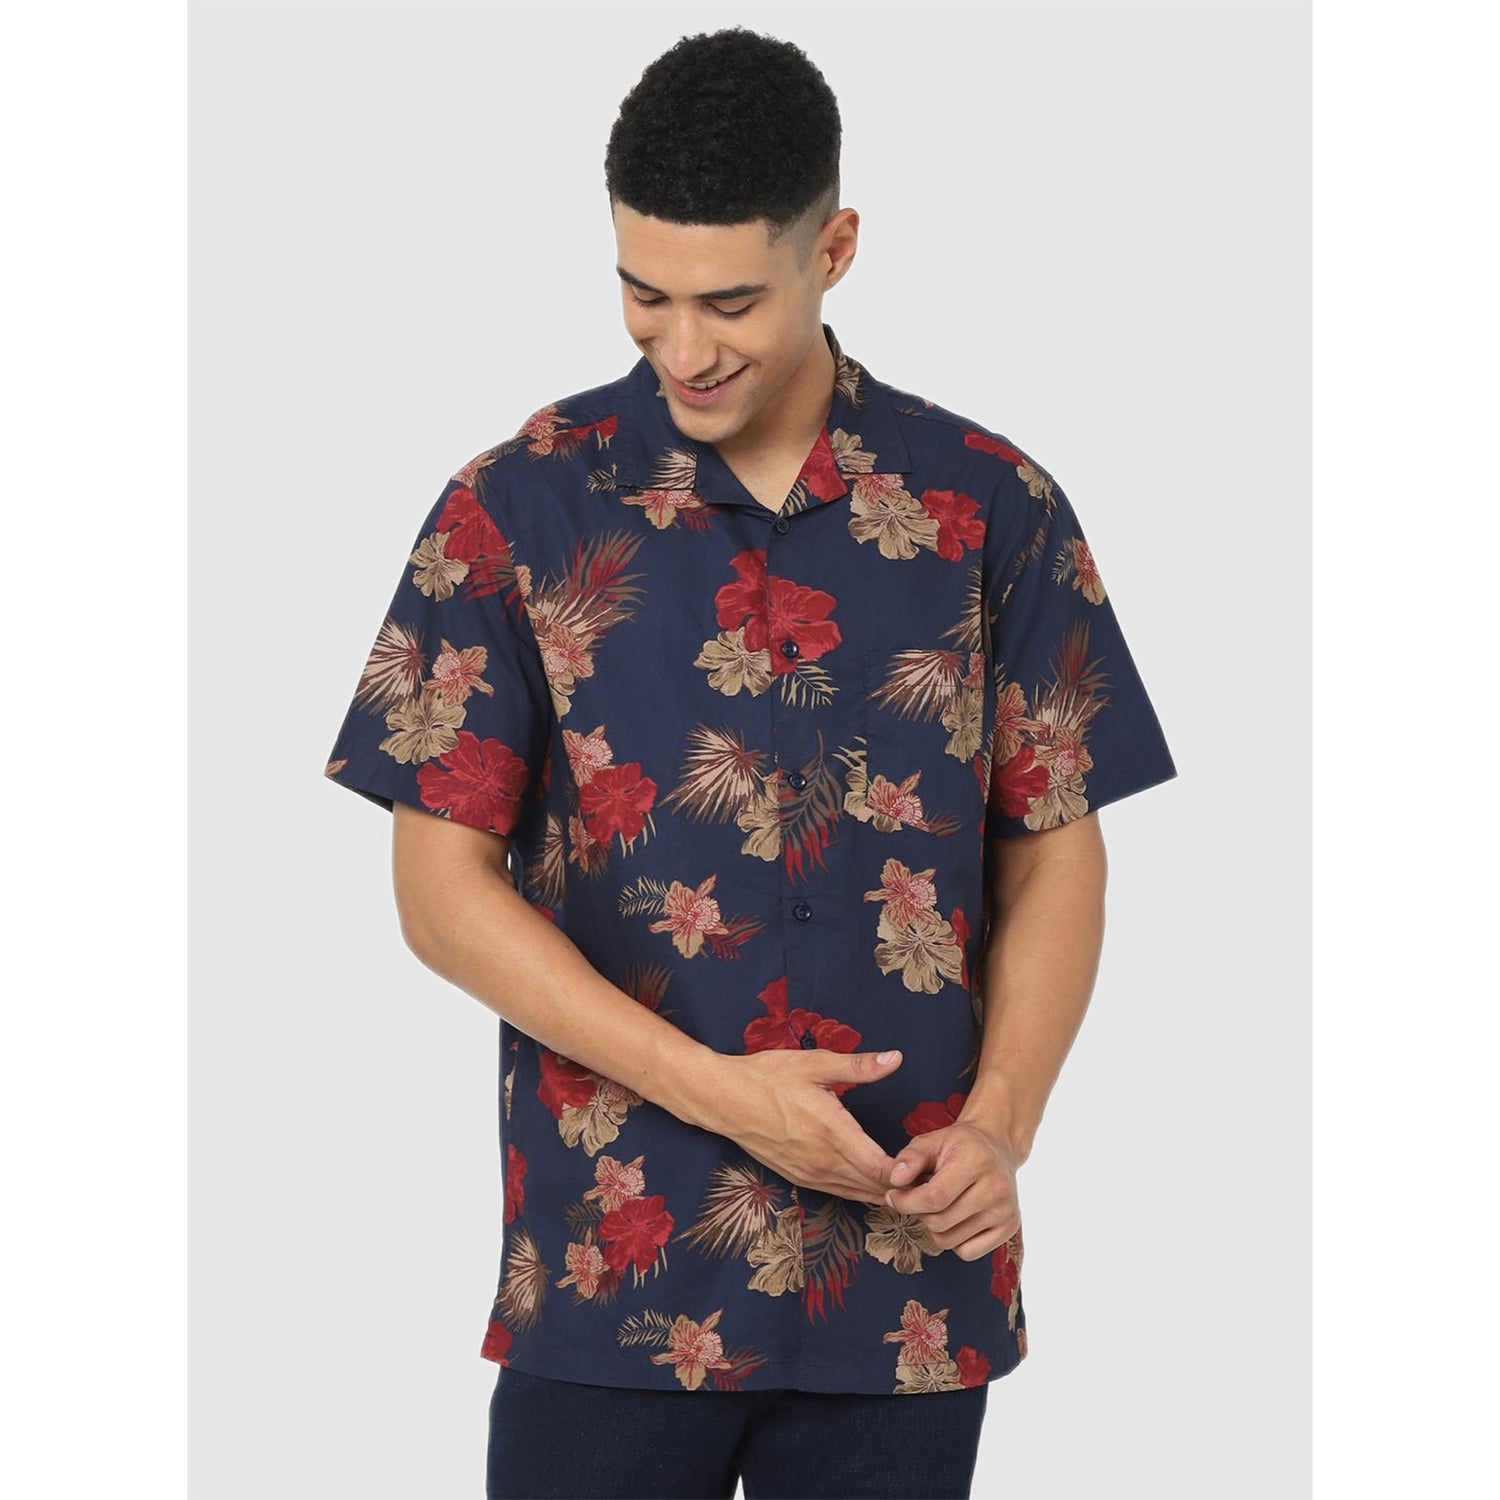 Navy Blue Regular Fit Classic Floral Printed Casual Shirt (BAFLOWER)